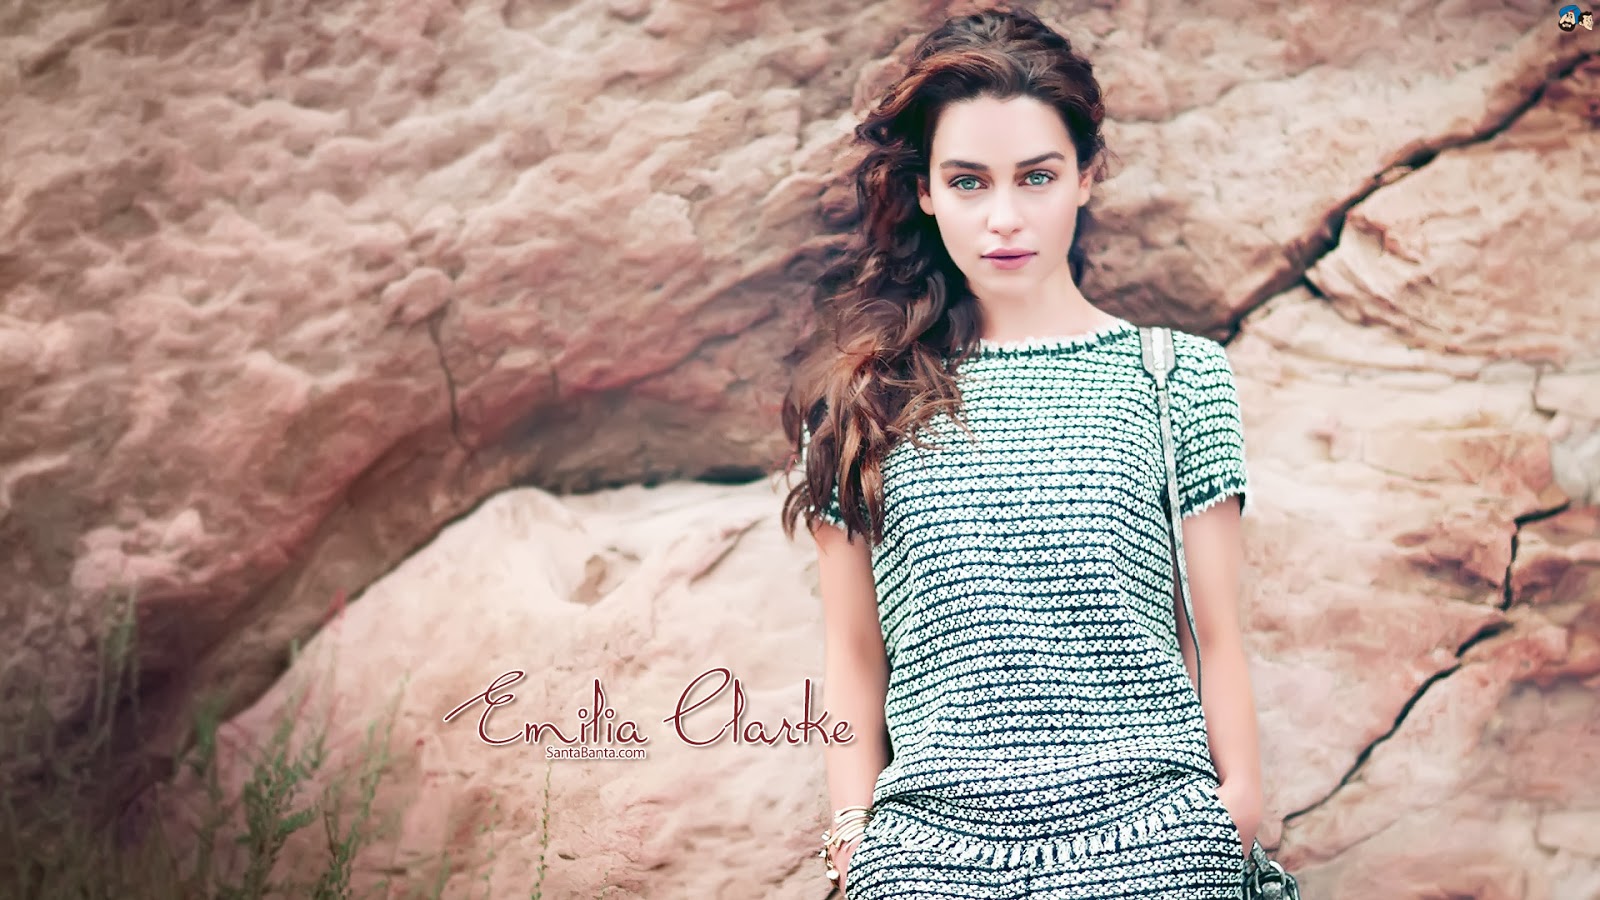 emilia clarke hd wallpapers,clothing,beauty,fashion model,fashion,dress